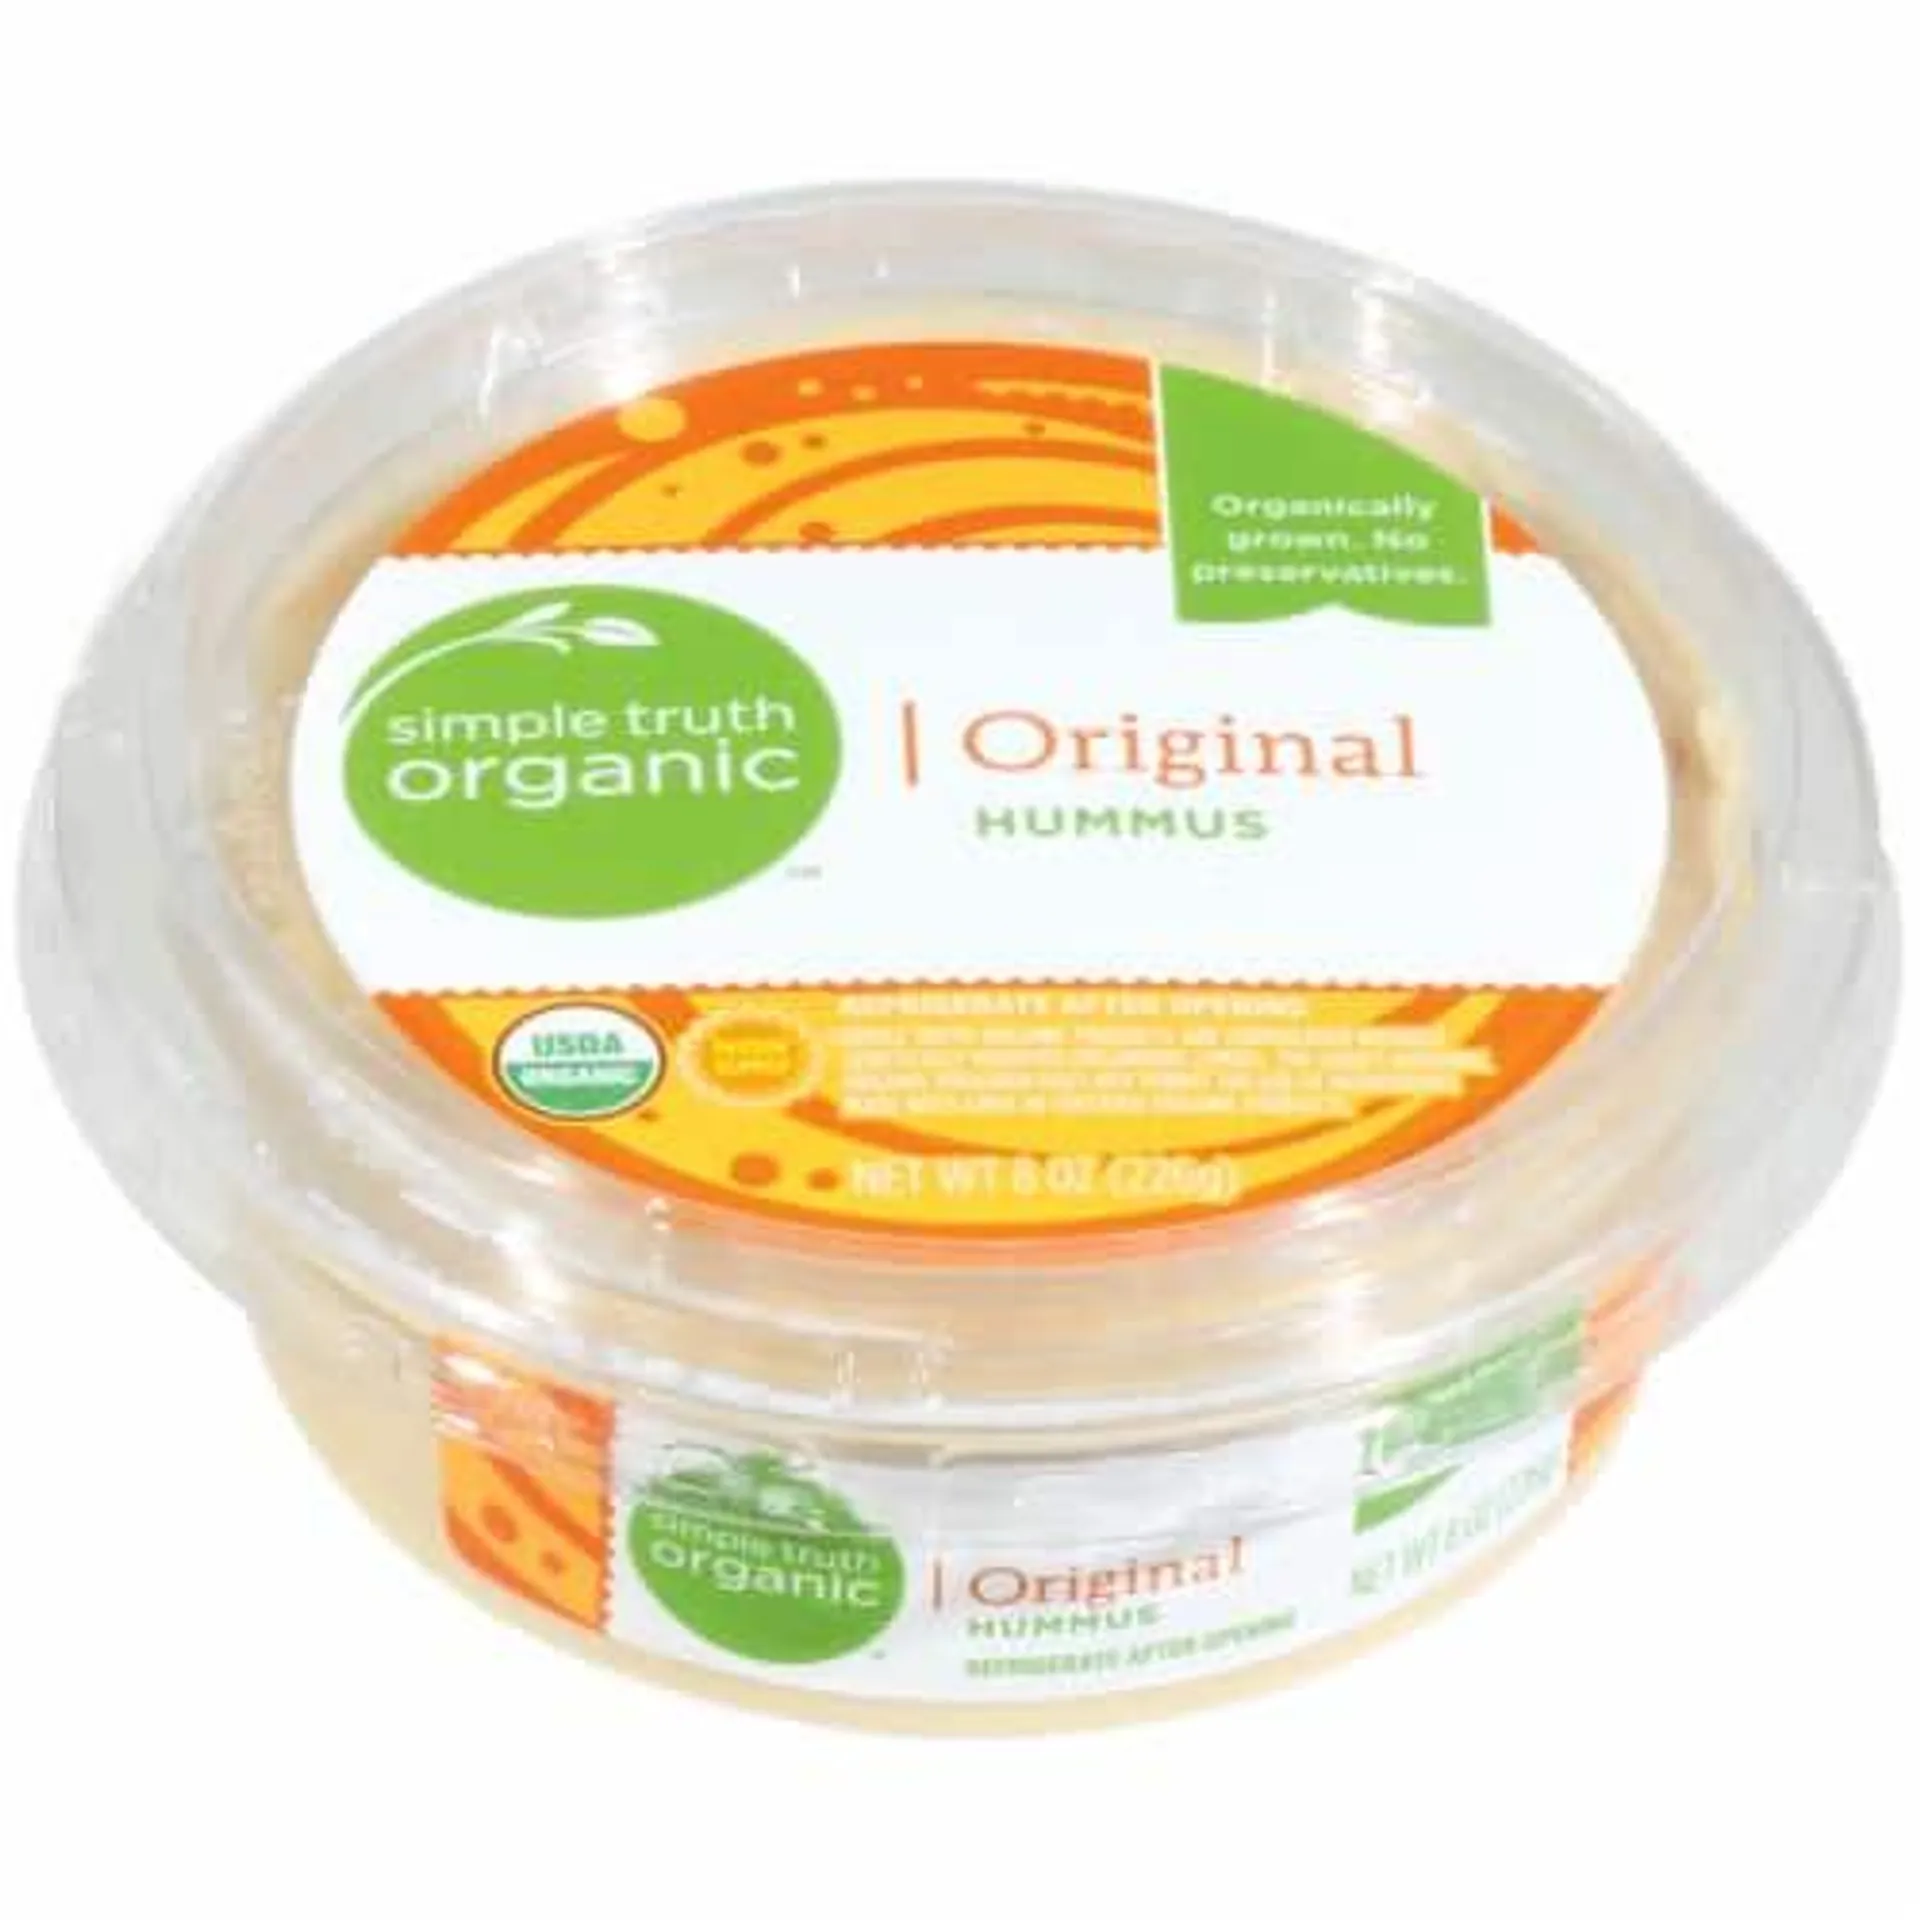 Simple Truth Organic Original Hummus 8 oz